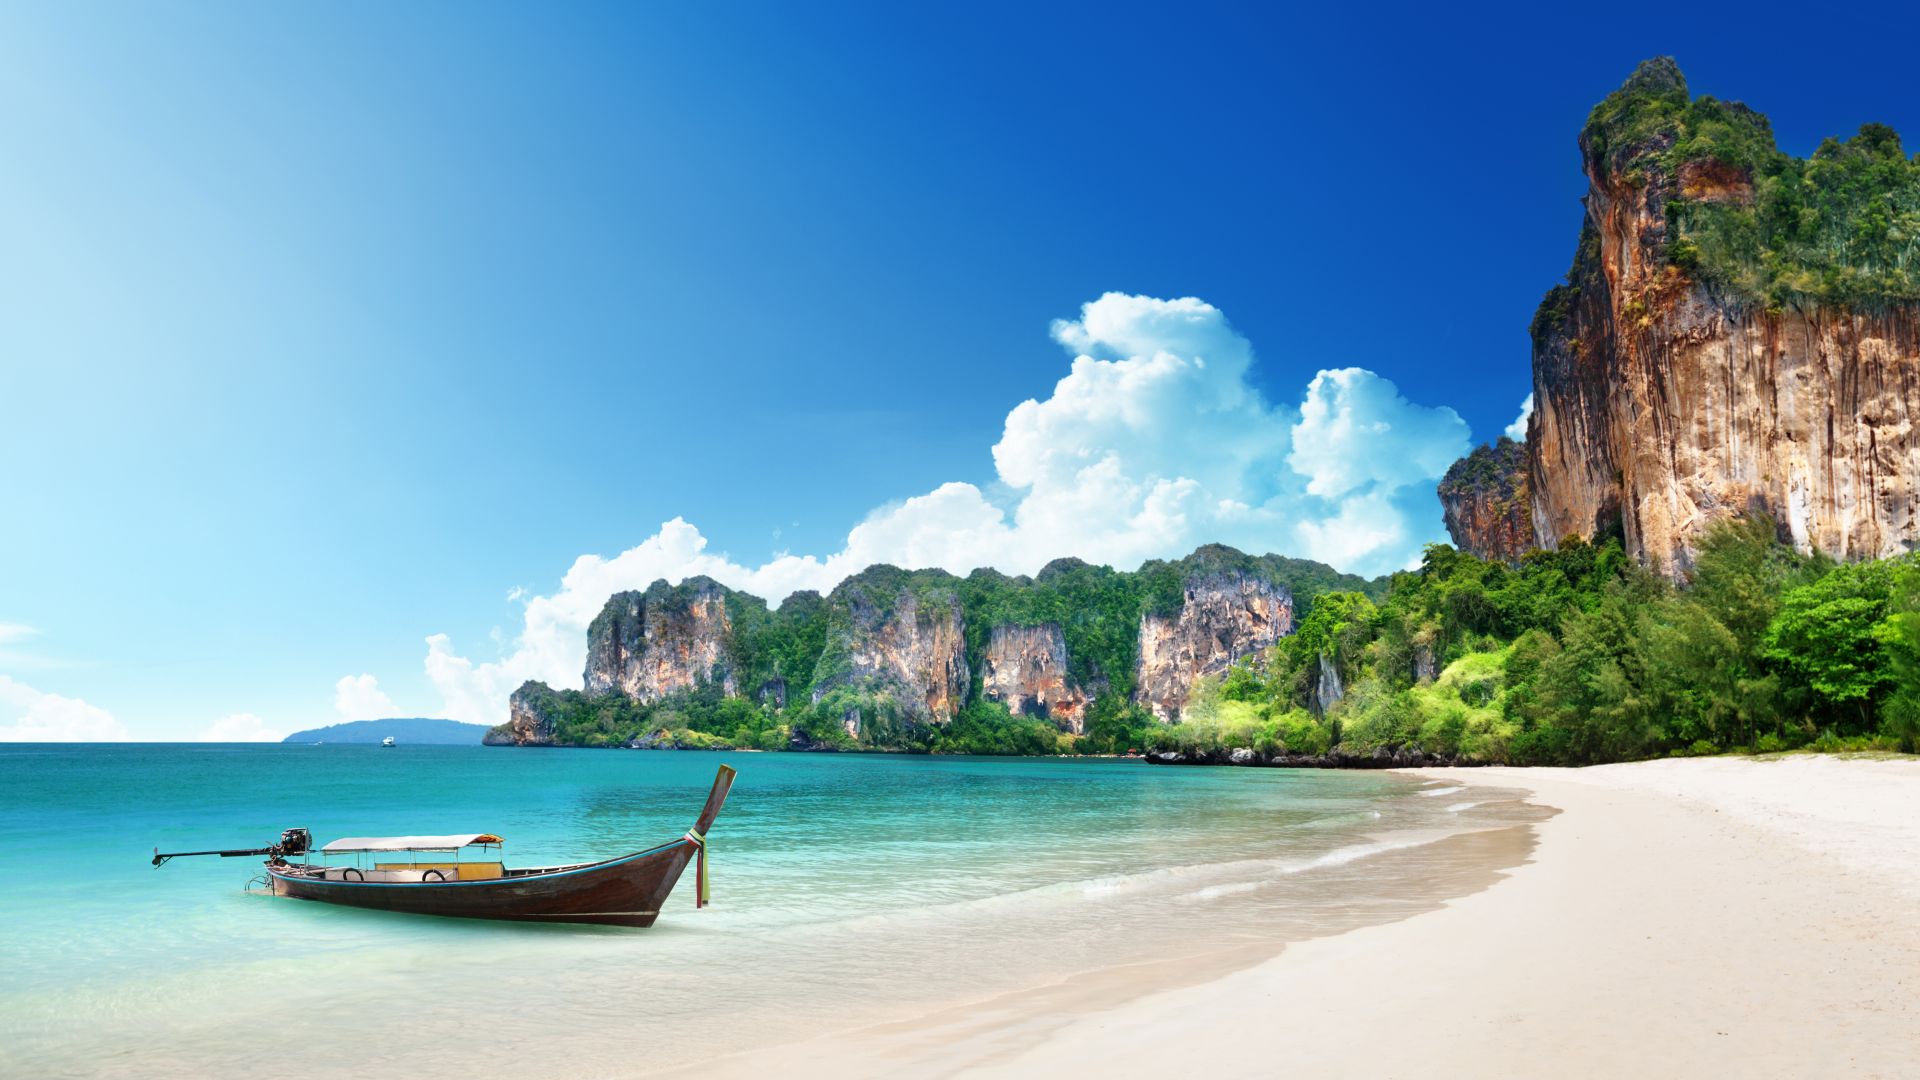 Таиланд, 5k, 4k, 8k, пляж, берег, лодка, скалы, путешествия, туризм, Thailand, 5k, 4k wallpaper, 8k, beach, shore, boat, rocks, travel, tourism (horizontal)